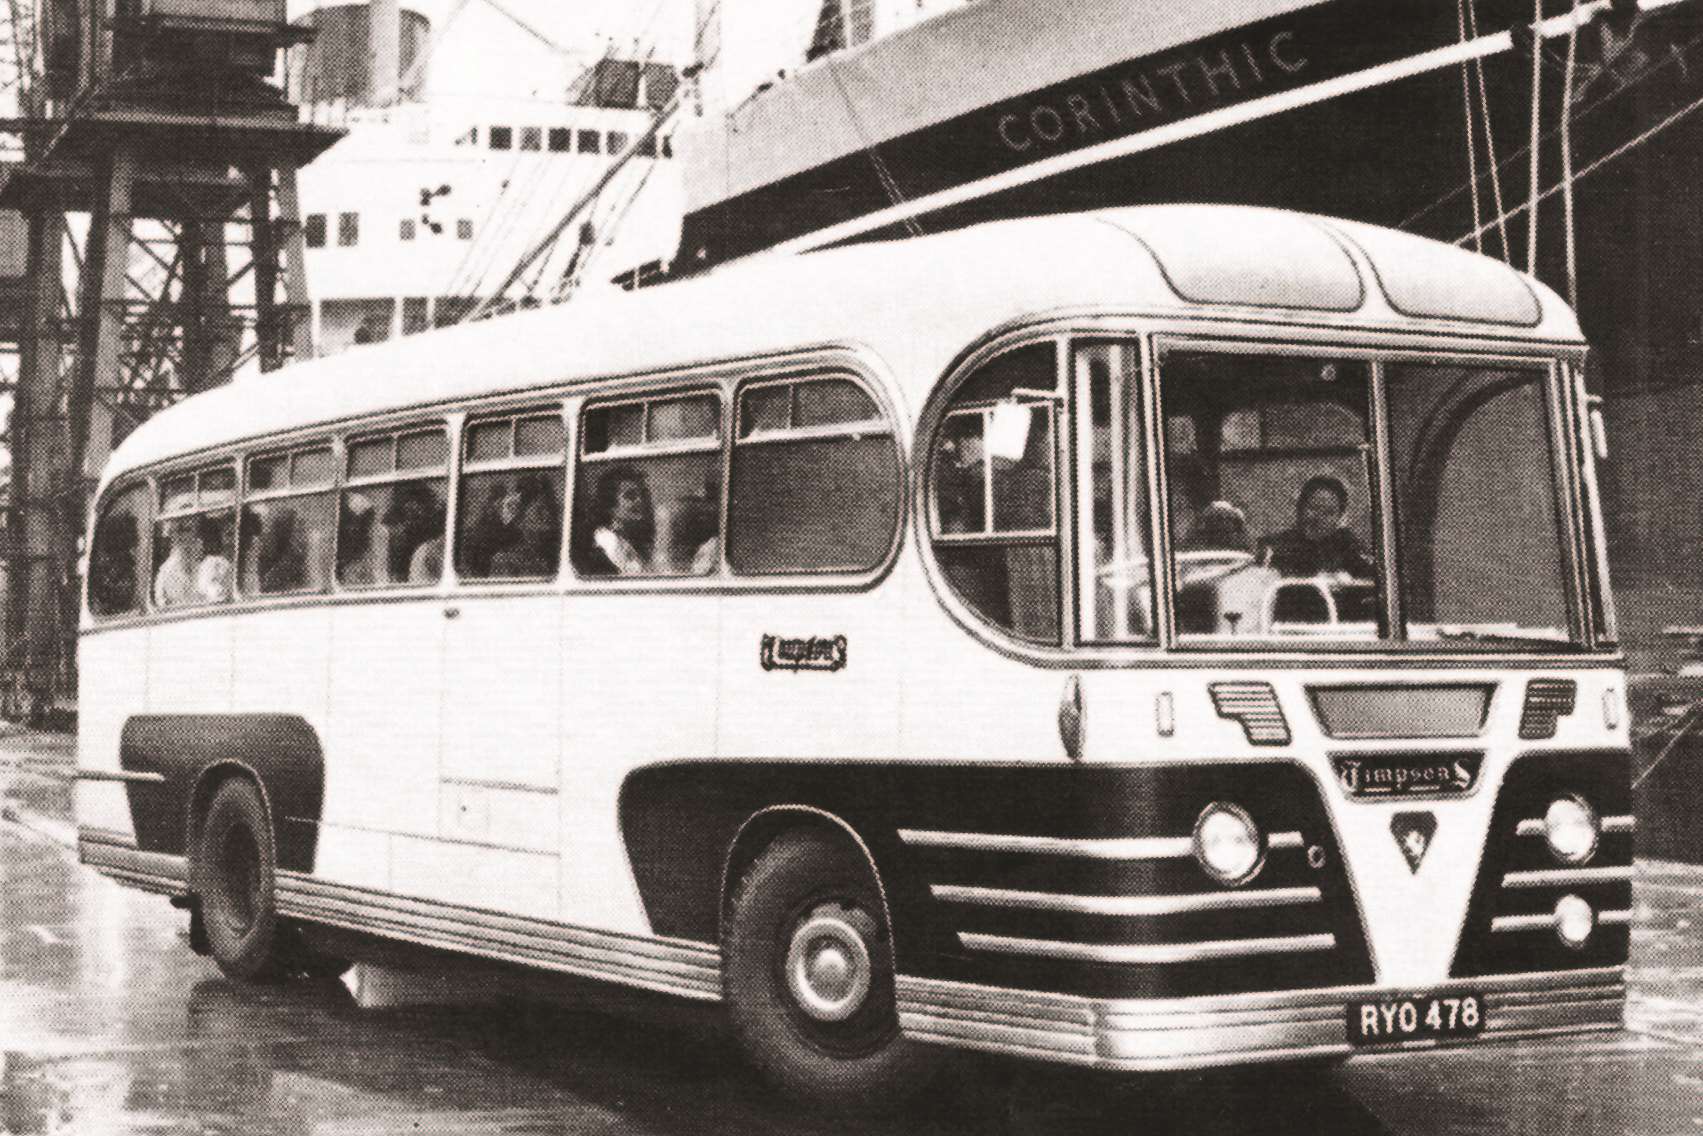 Beadles sold buses until 1957